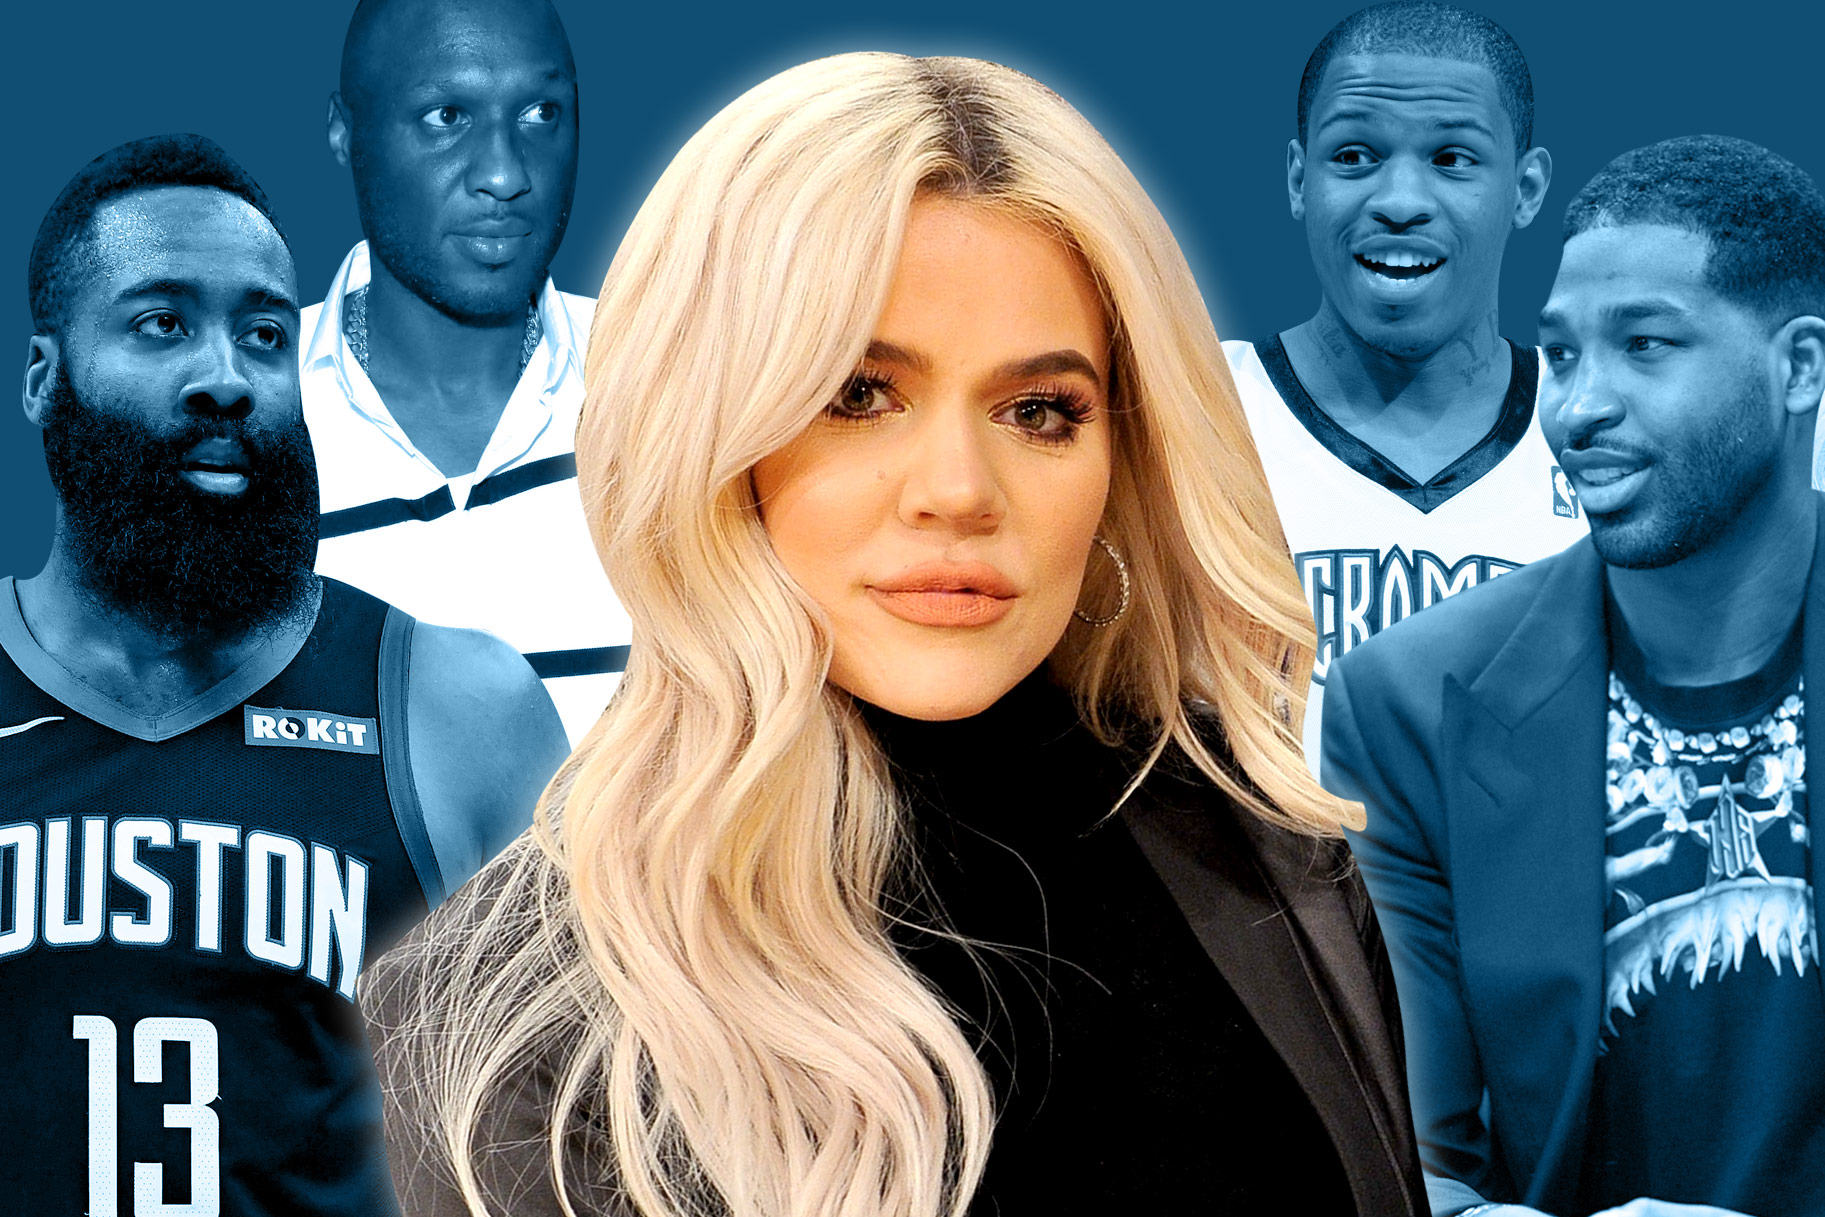 Khloe Kardashian basketball exes: Rashad McCants (Minnesota Timberwolves), Lamar Odom (Los Angeles Lakers), James Harden (Houston Rockets), Tristan Thompson (Cleveland Cavaliers)